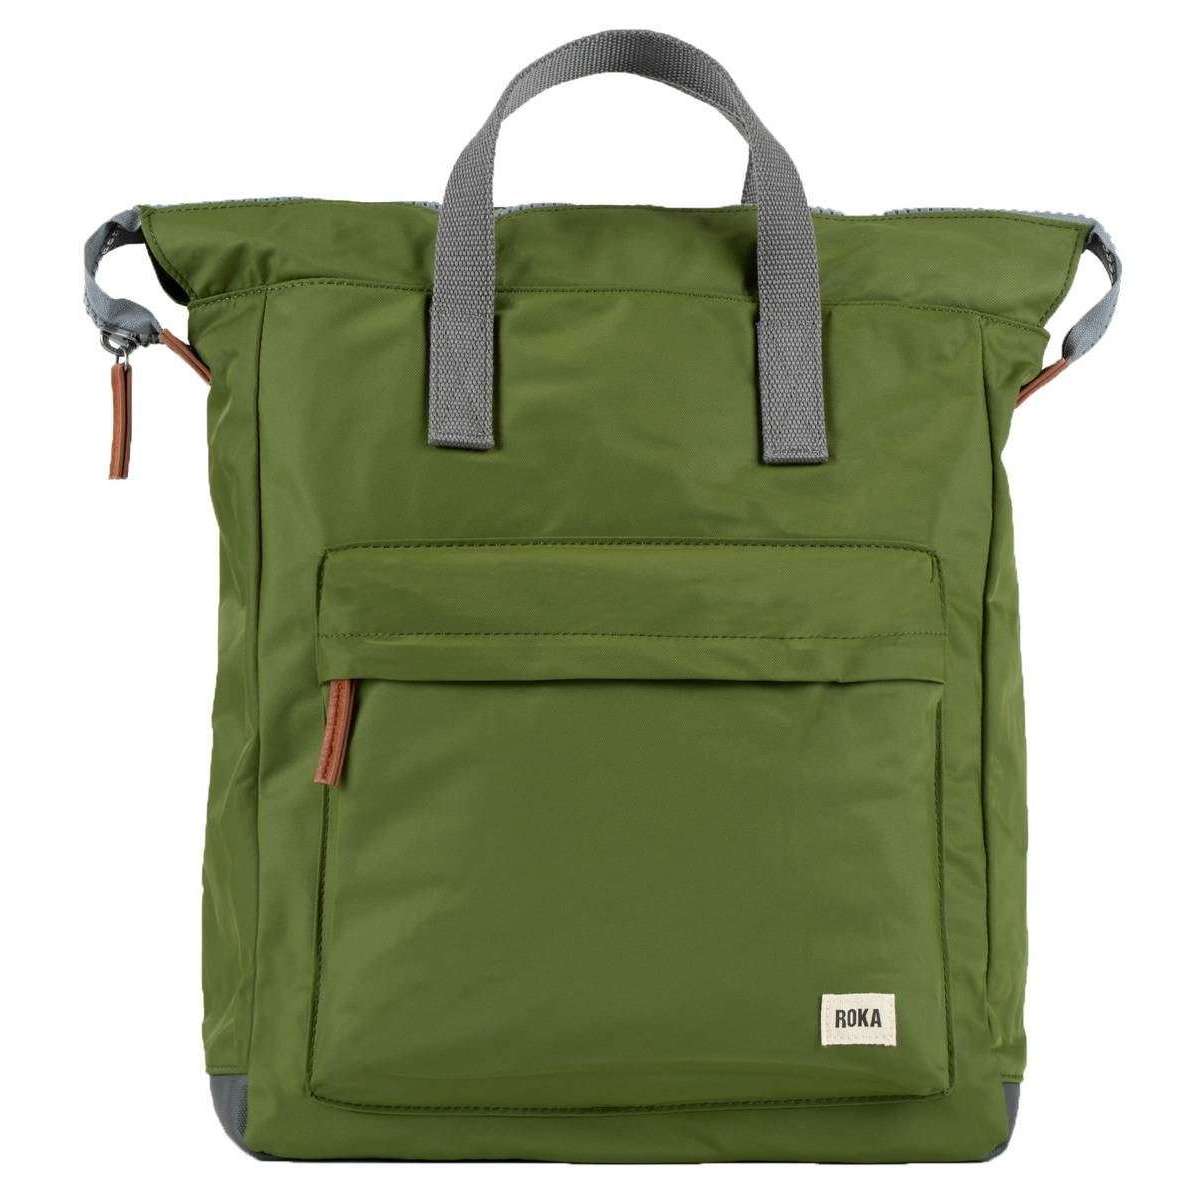 Roka Bantry B Large Sustainable Nylon Backpack - Avocado Green